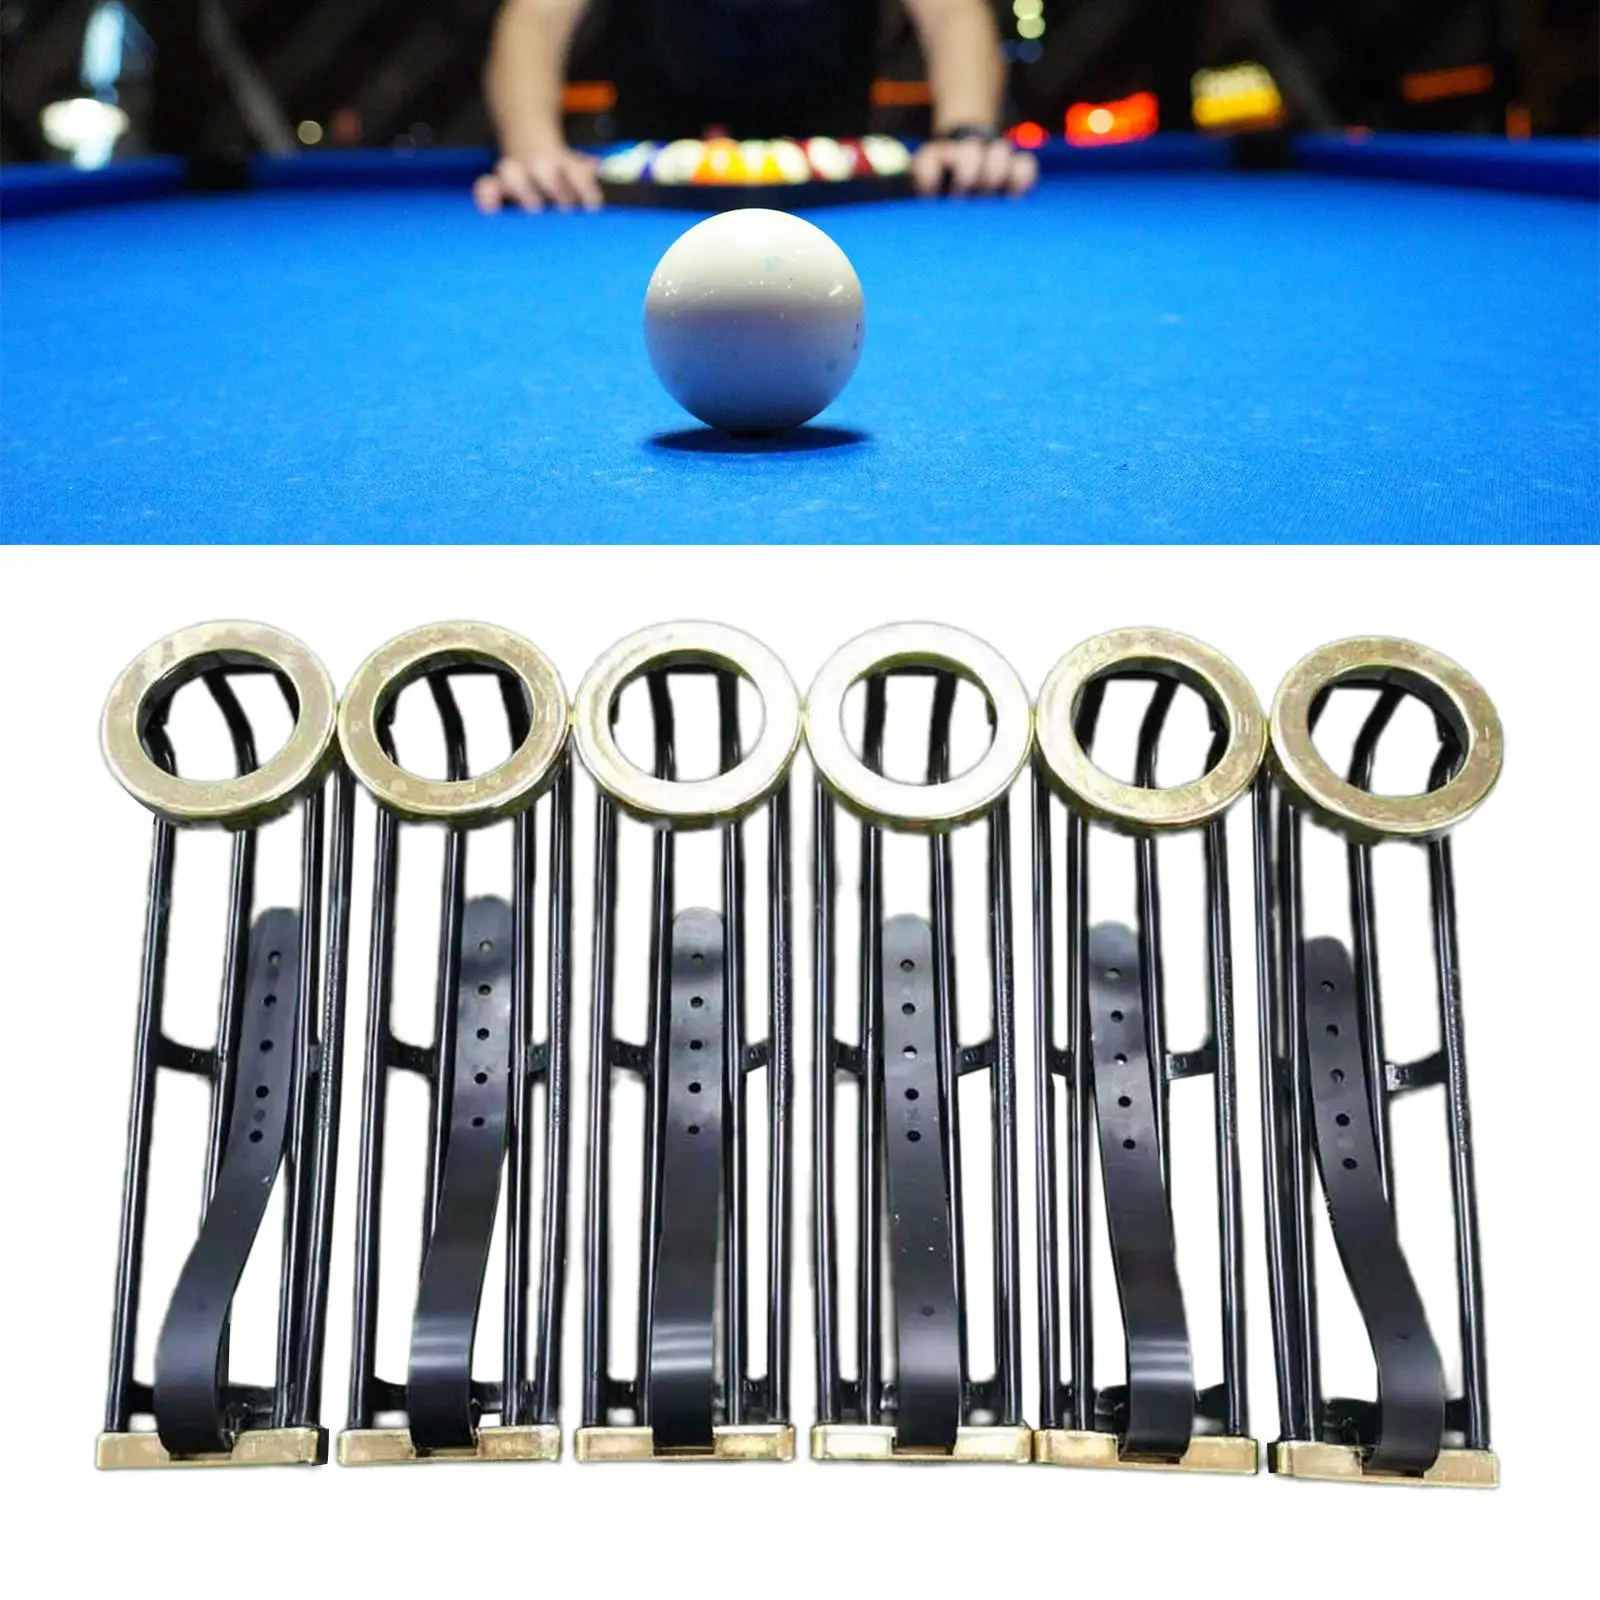 6Pcs Billiards Table Pocket Rail Equipment Lightweight Convenient Using Snooker Table Entertainment Snooker Pockets Slide Track